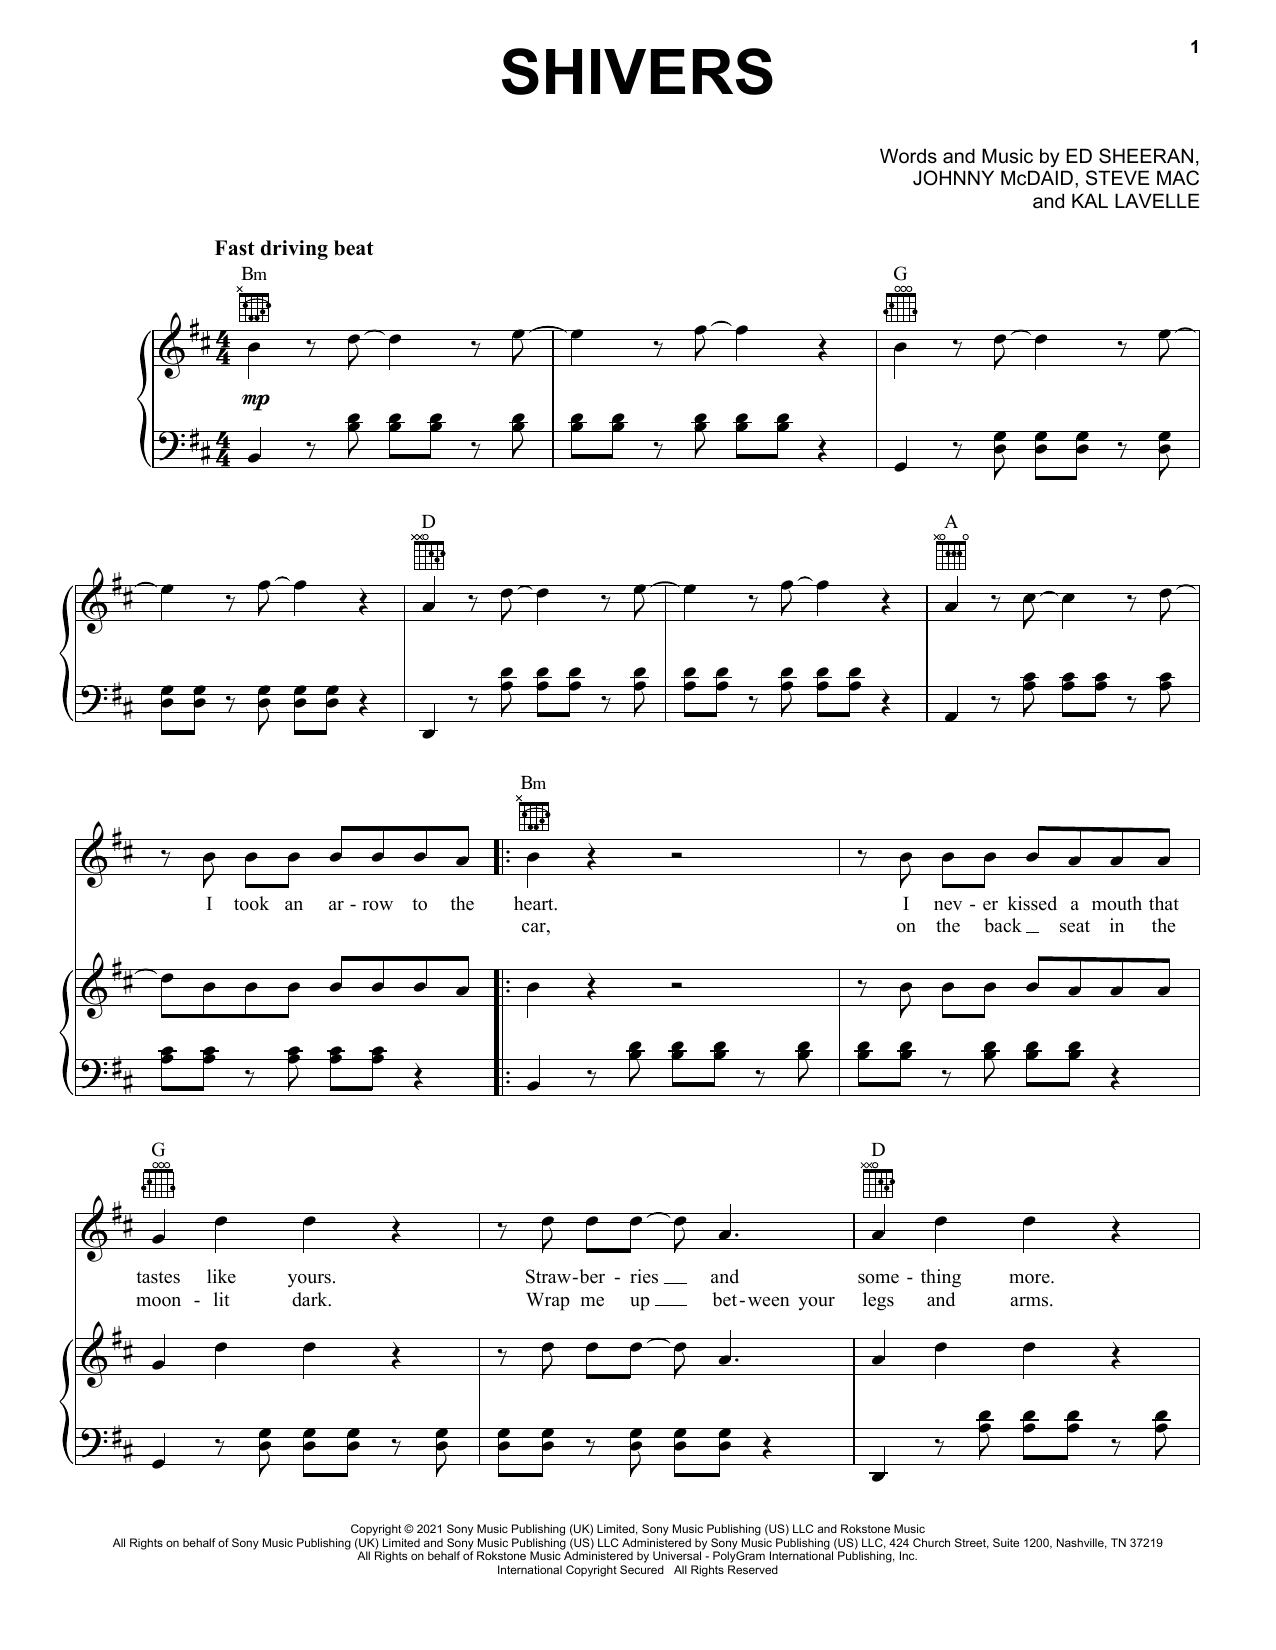 Ed Sheeran Shivers Sheet Music Notes & Chords for Really Easy Piano - Download or Print PDF